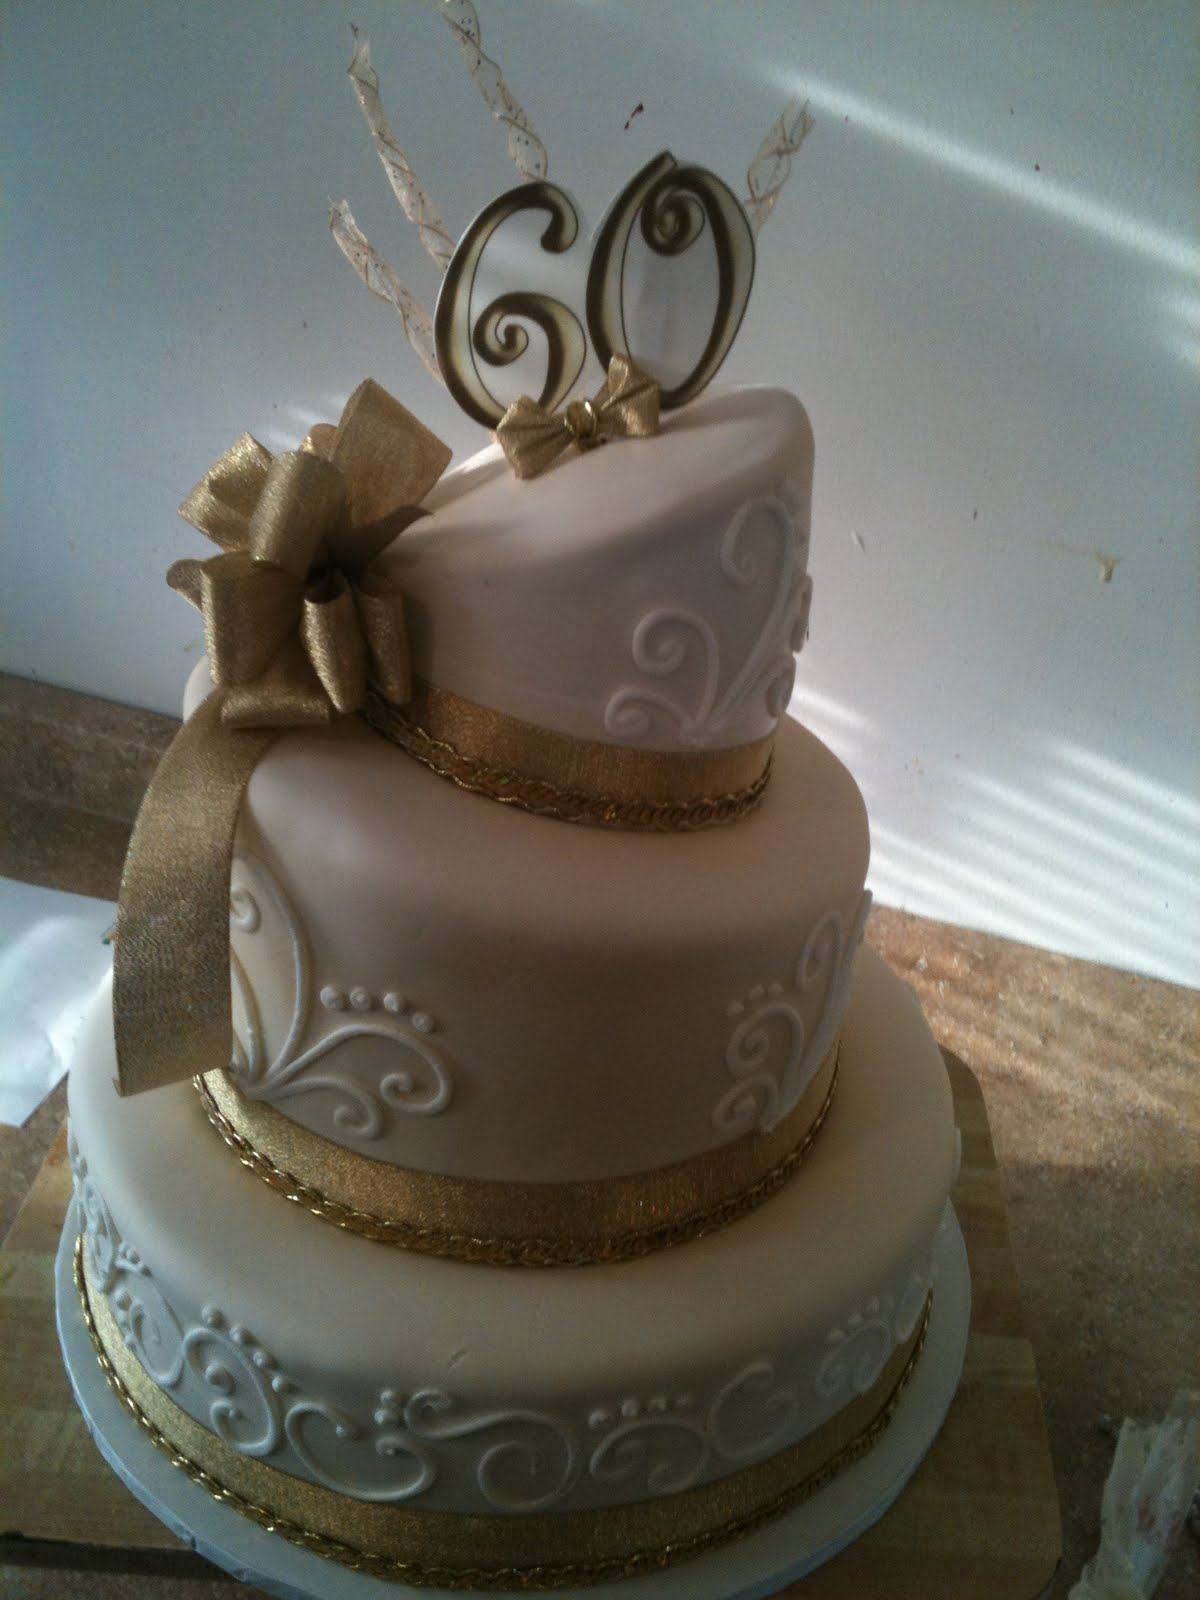 Hector's Custom Cakes: 60th birthday gold edition topsy turvy